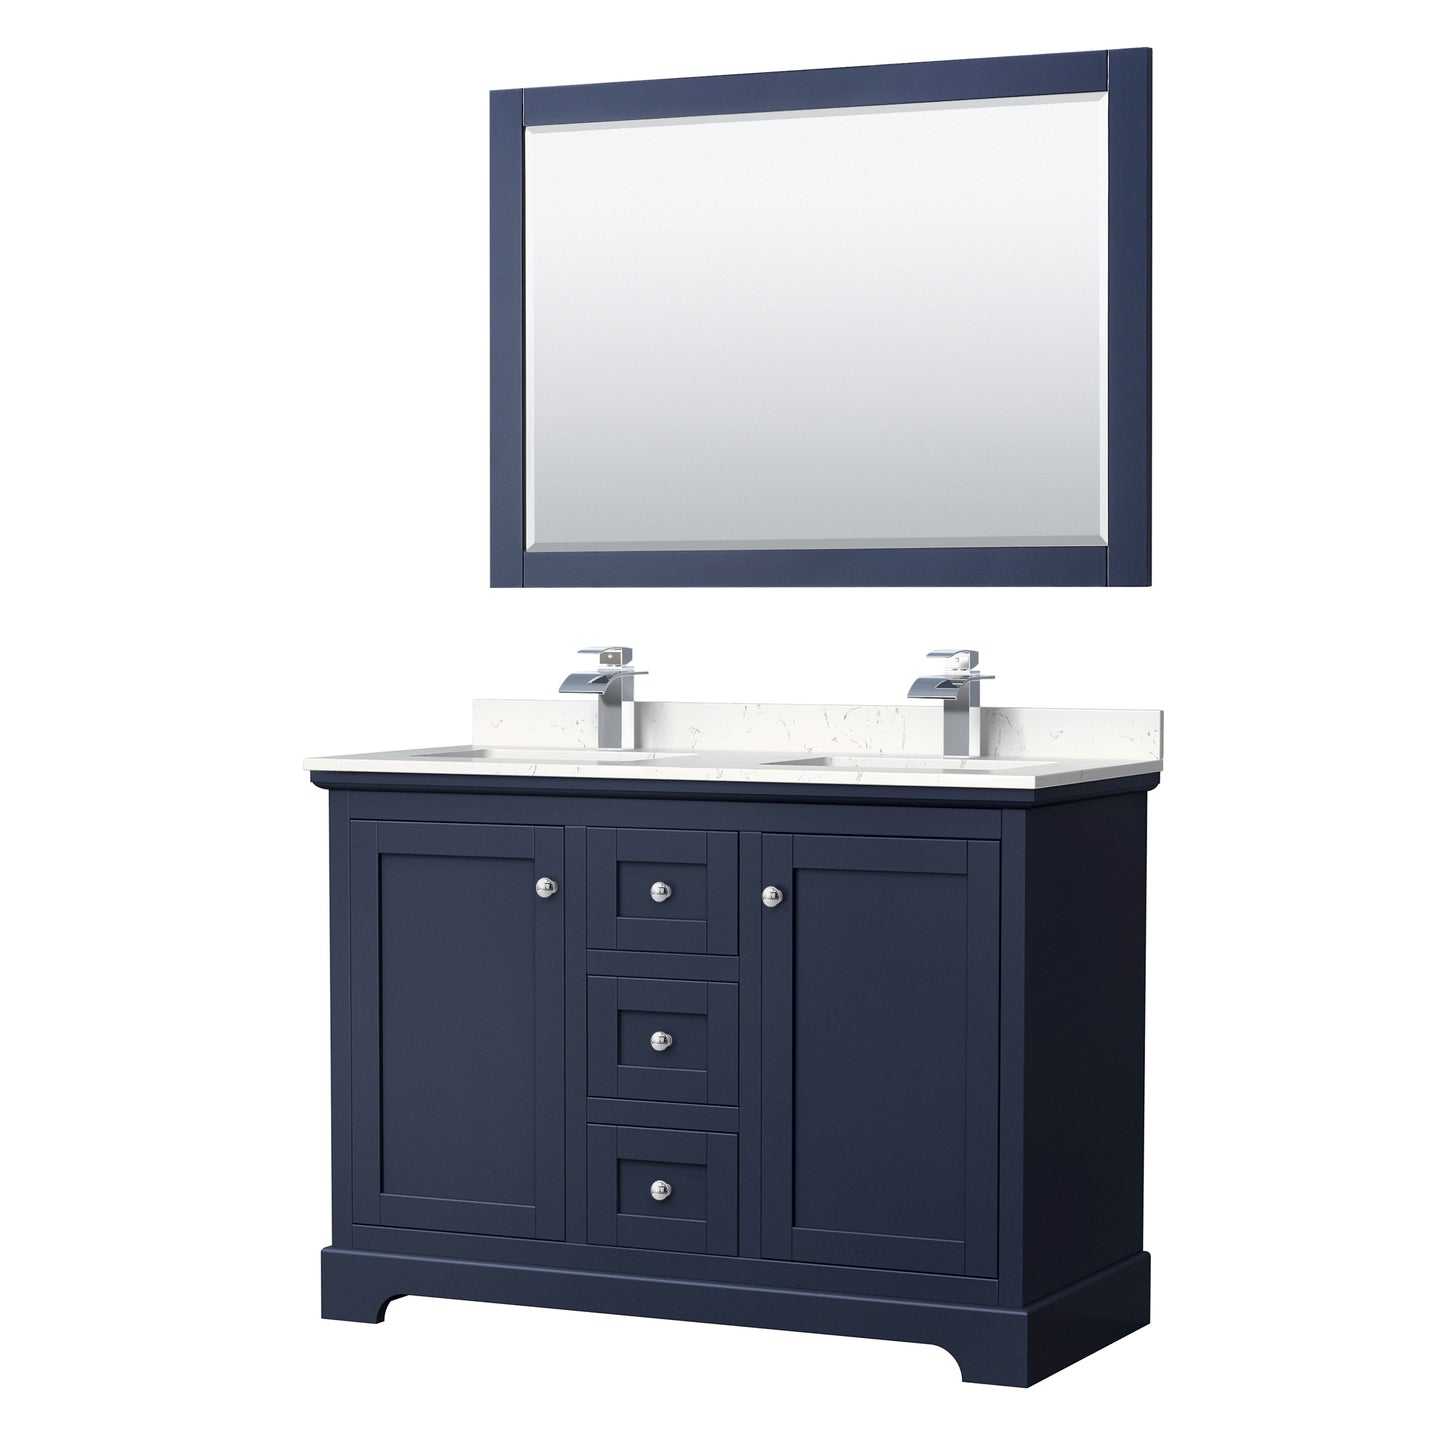 Wyndham Avery 48 Inch Double Bathroom Vanity in Dark Blue, Cultured Marble Countertop, Undermount Square Sinks, Polished Chrome Trim - Luxe Bathroom Vanities